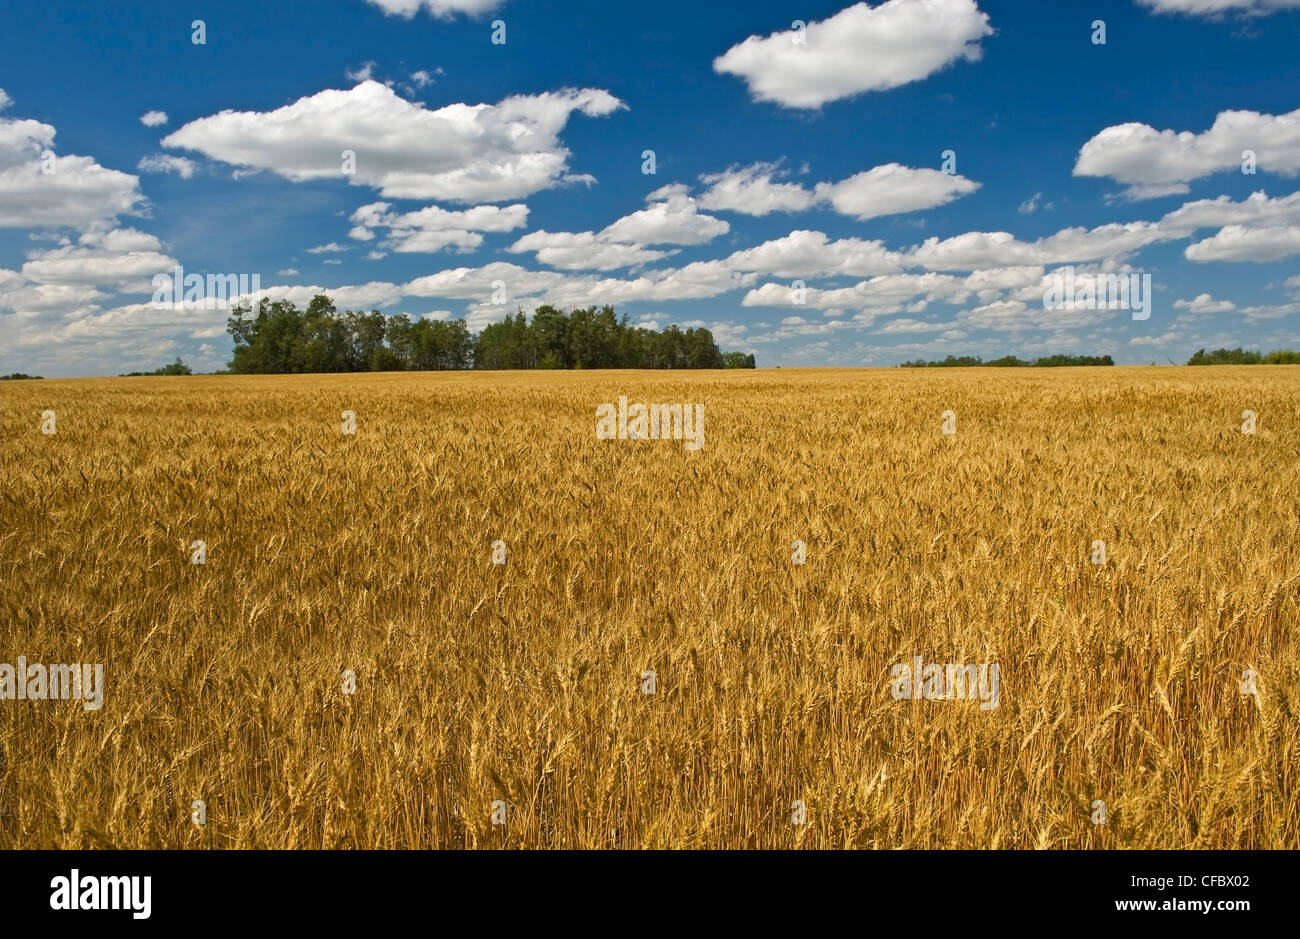 Country road between grain fields, Manor, Saskatchewan, Canada Stock Photo